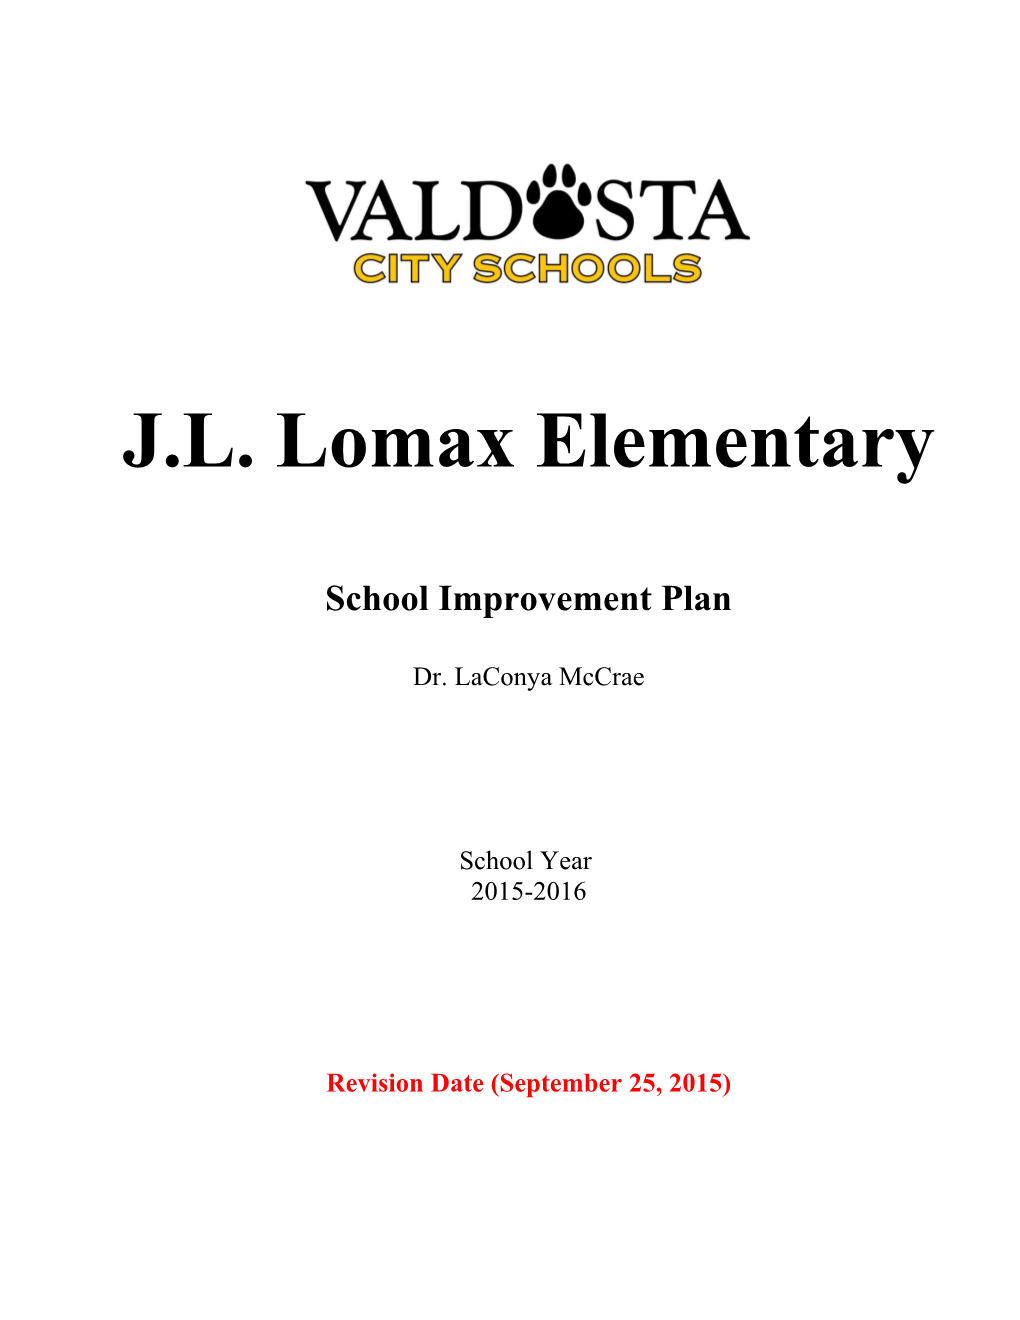 Title I School-Wide/School Improvement Plan 2015-2016